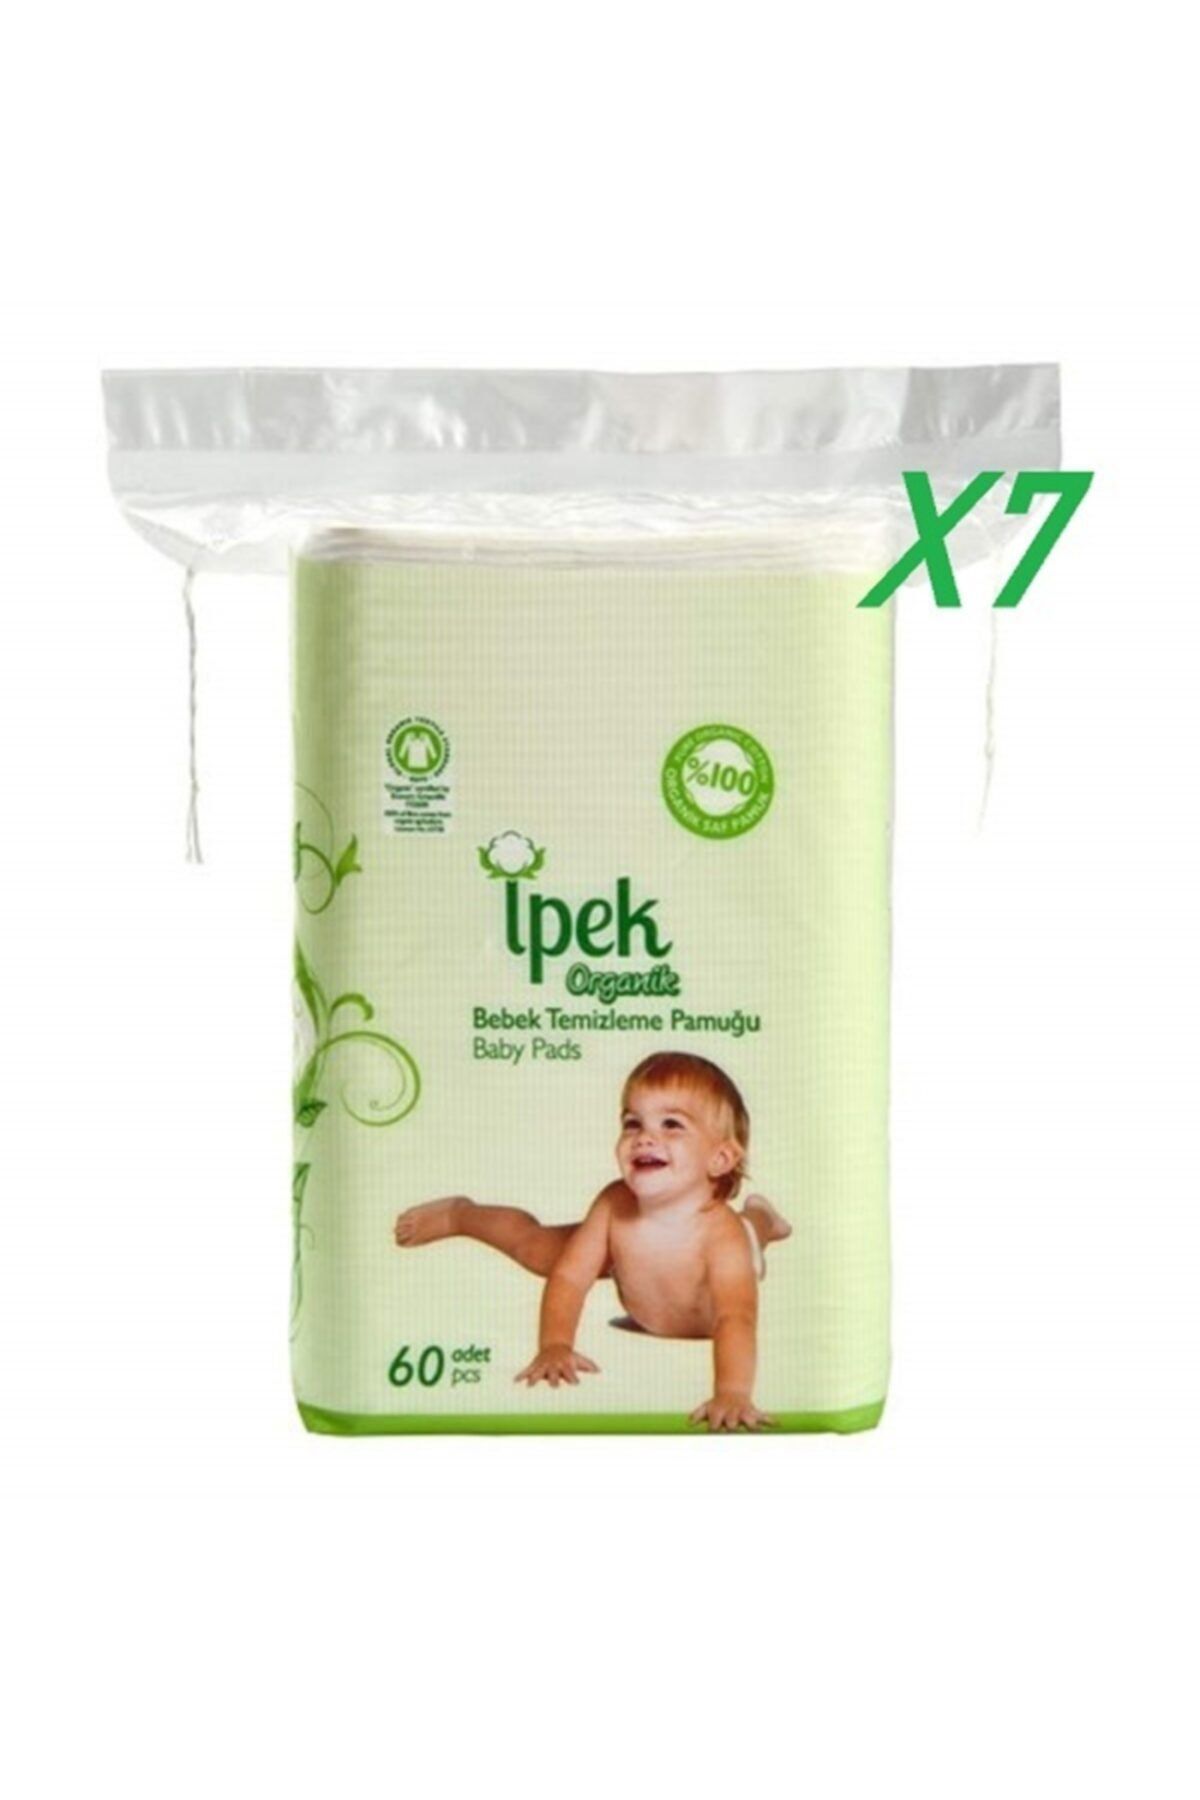 İpek Çocuk Ipek Organik Bebek Temizleme Pamuğu X 7 'li Paket